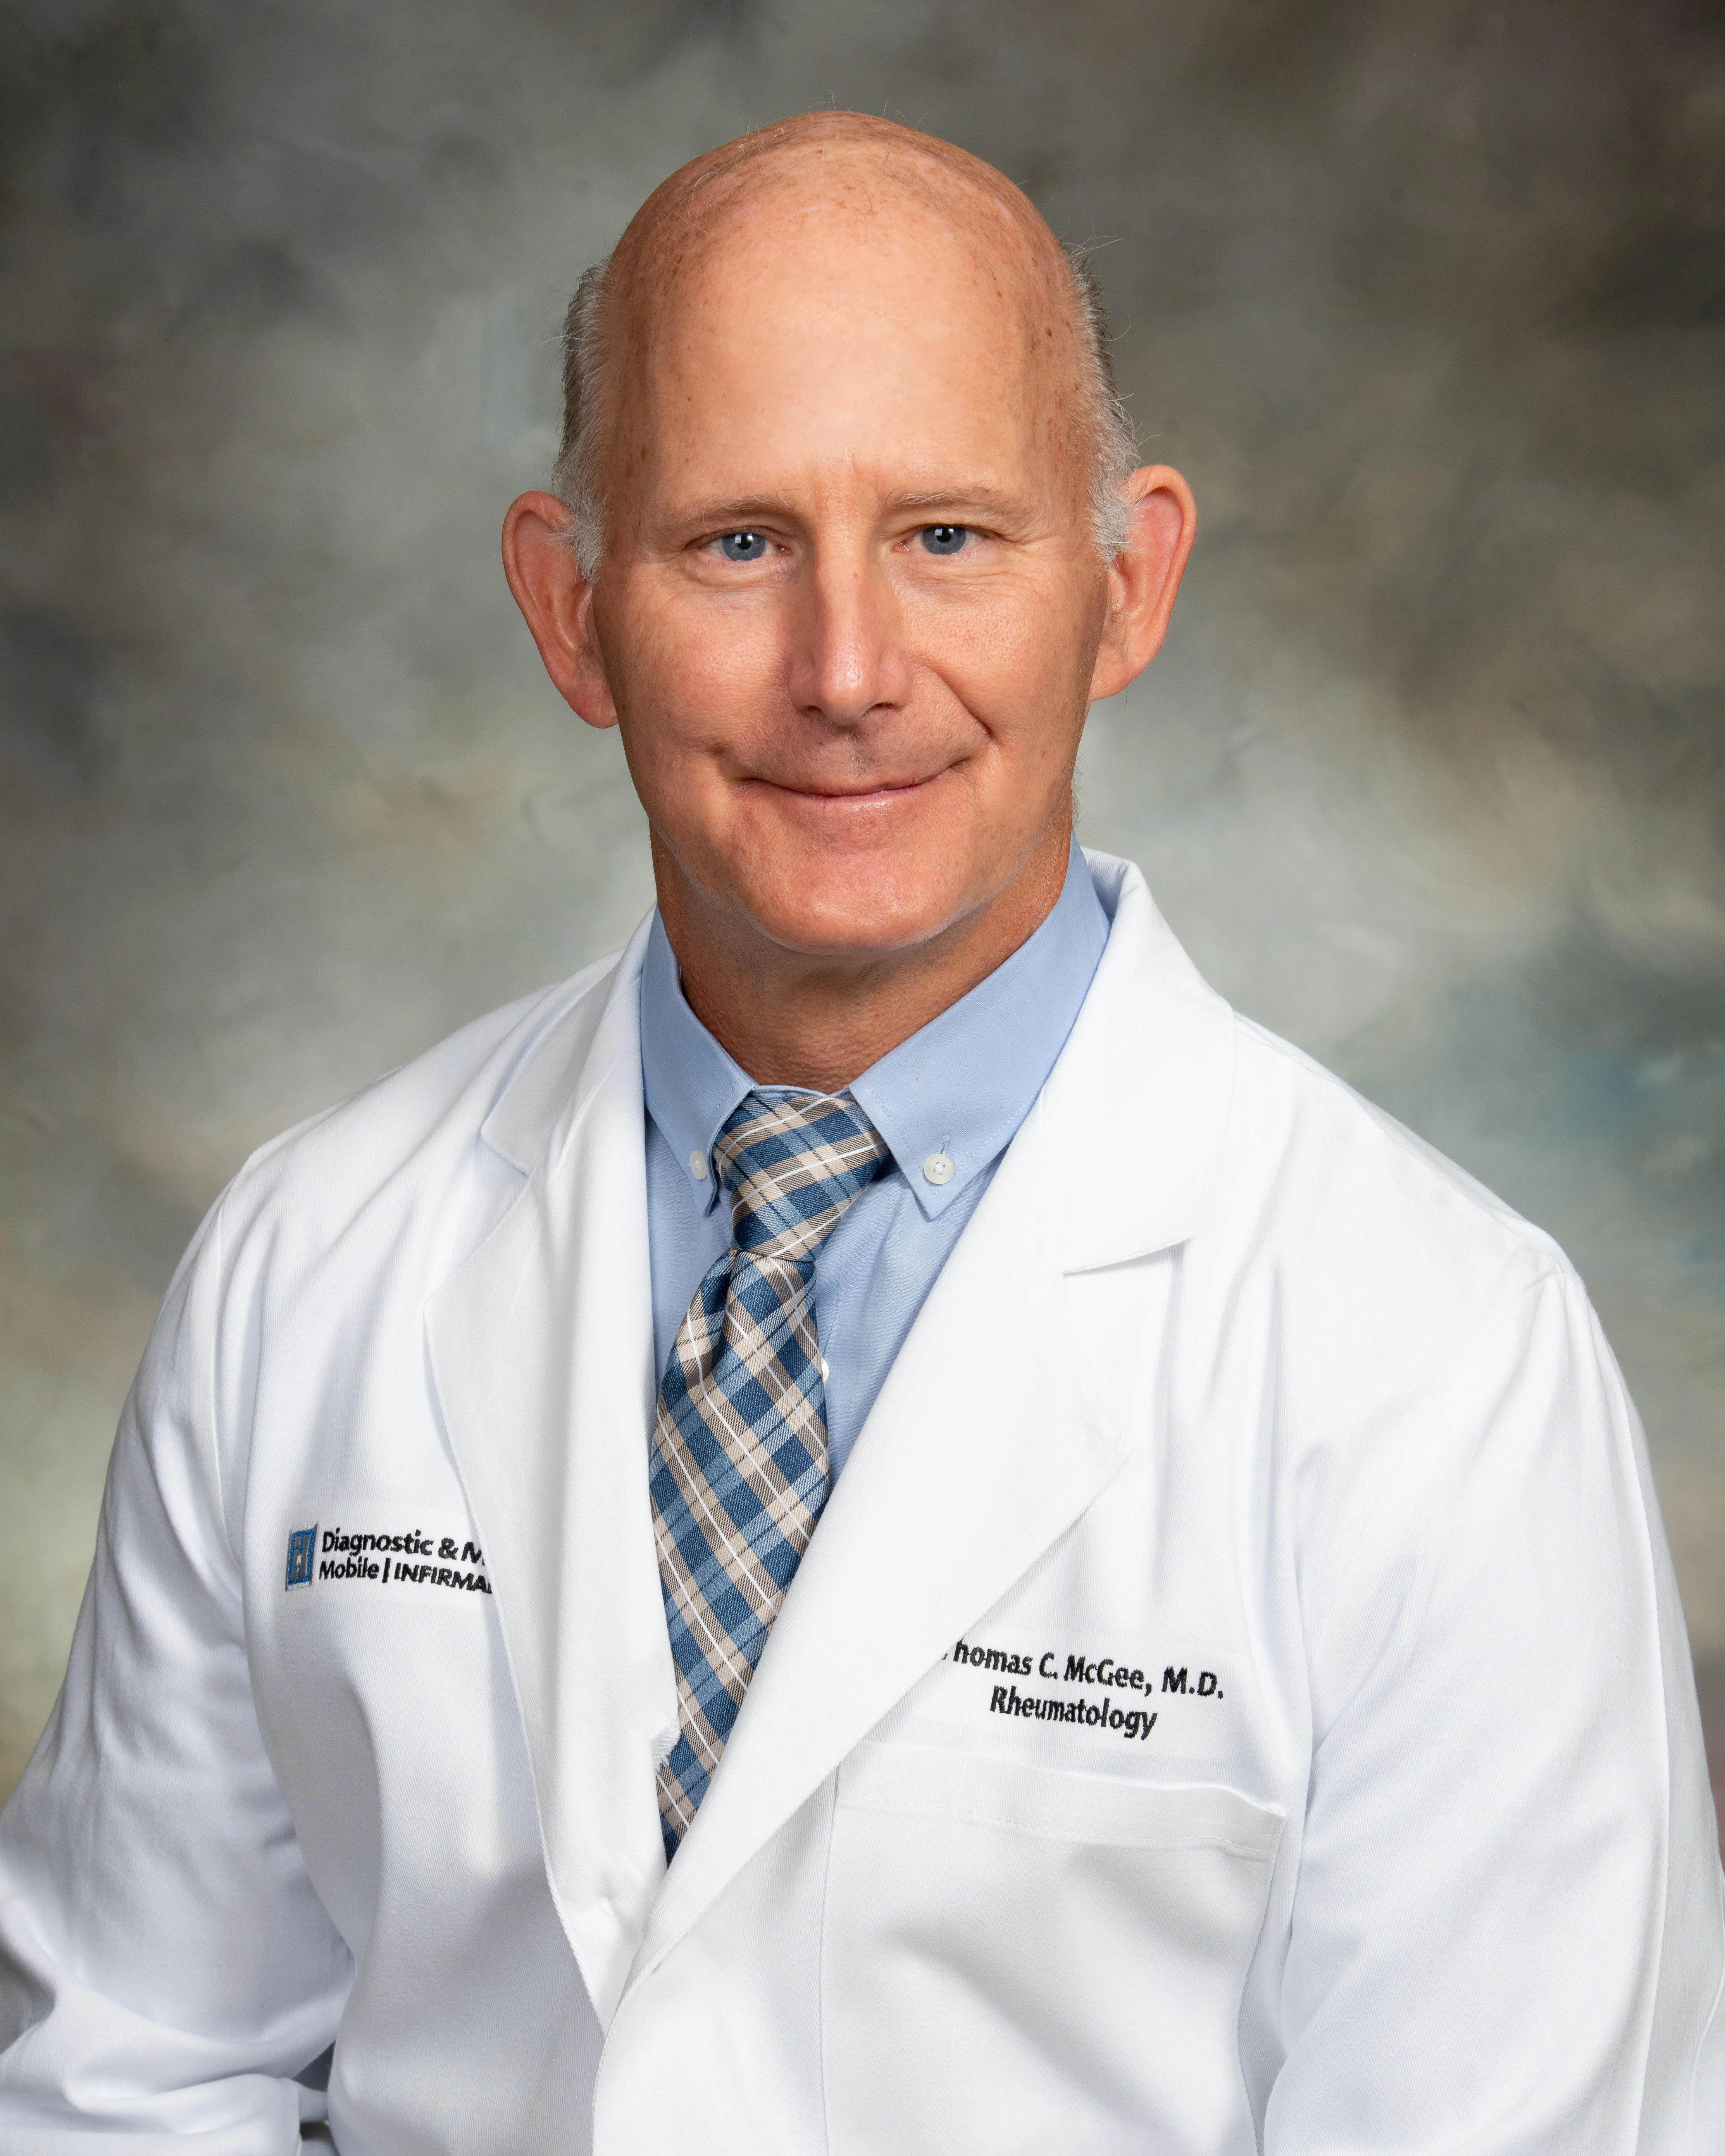 Dr. Thomas C Mcgee, MD